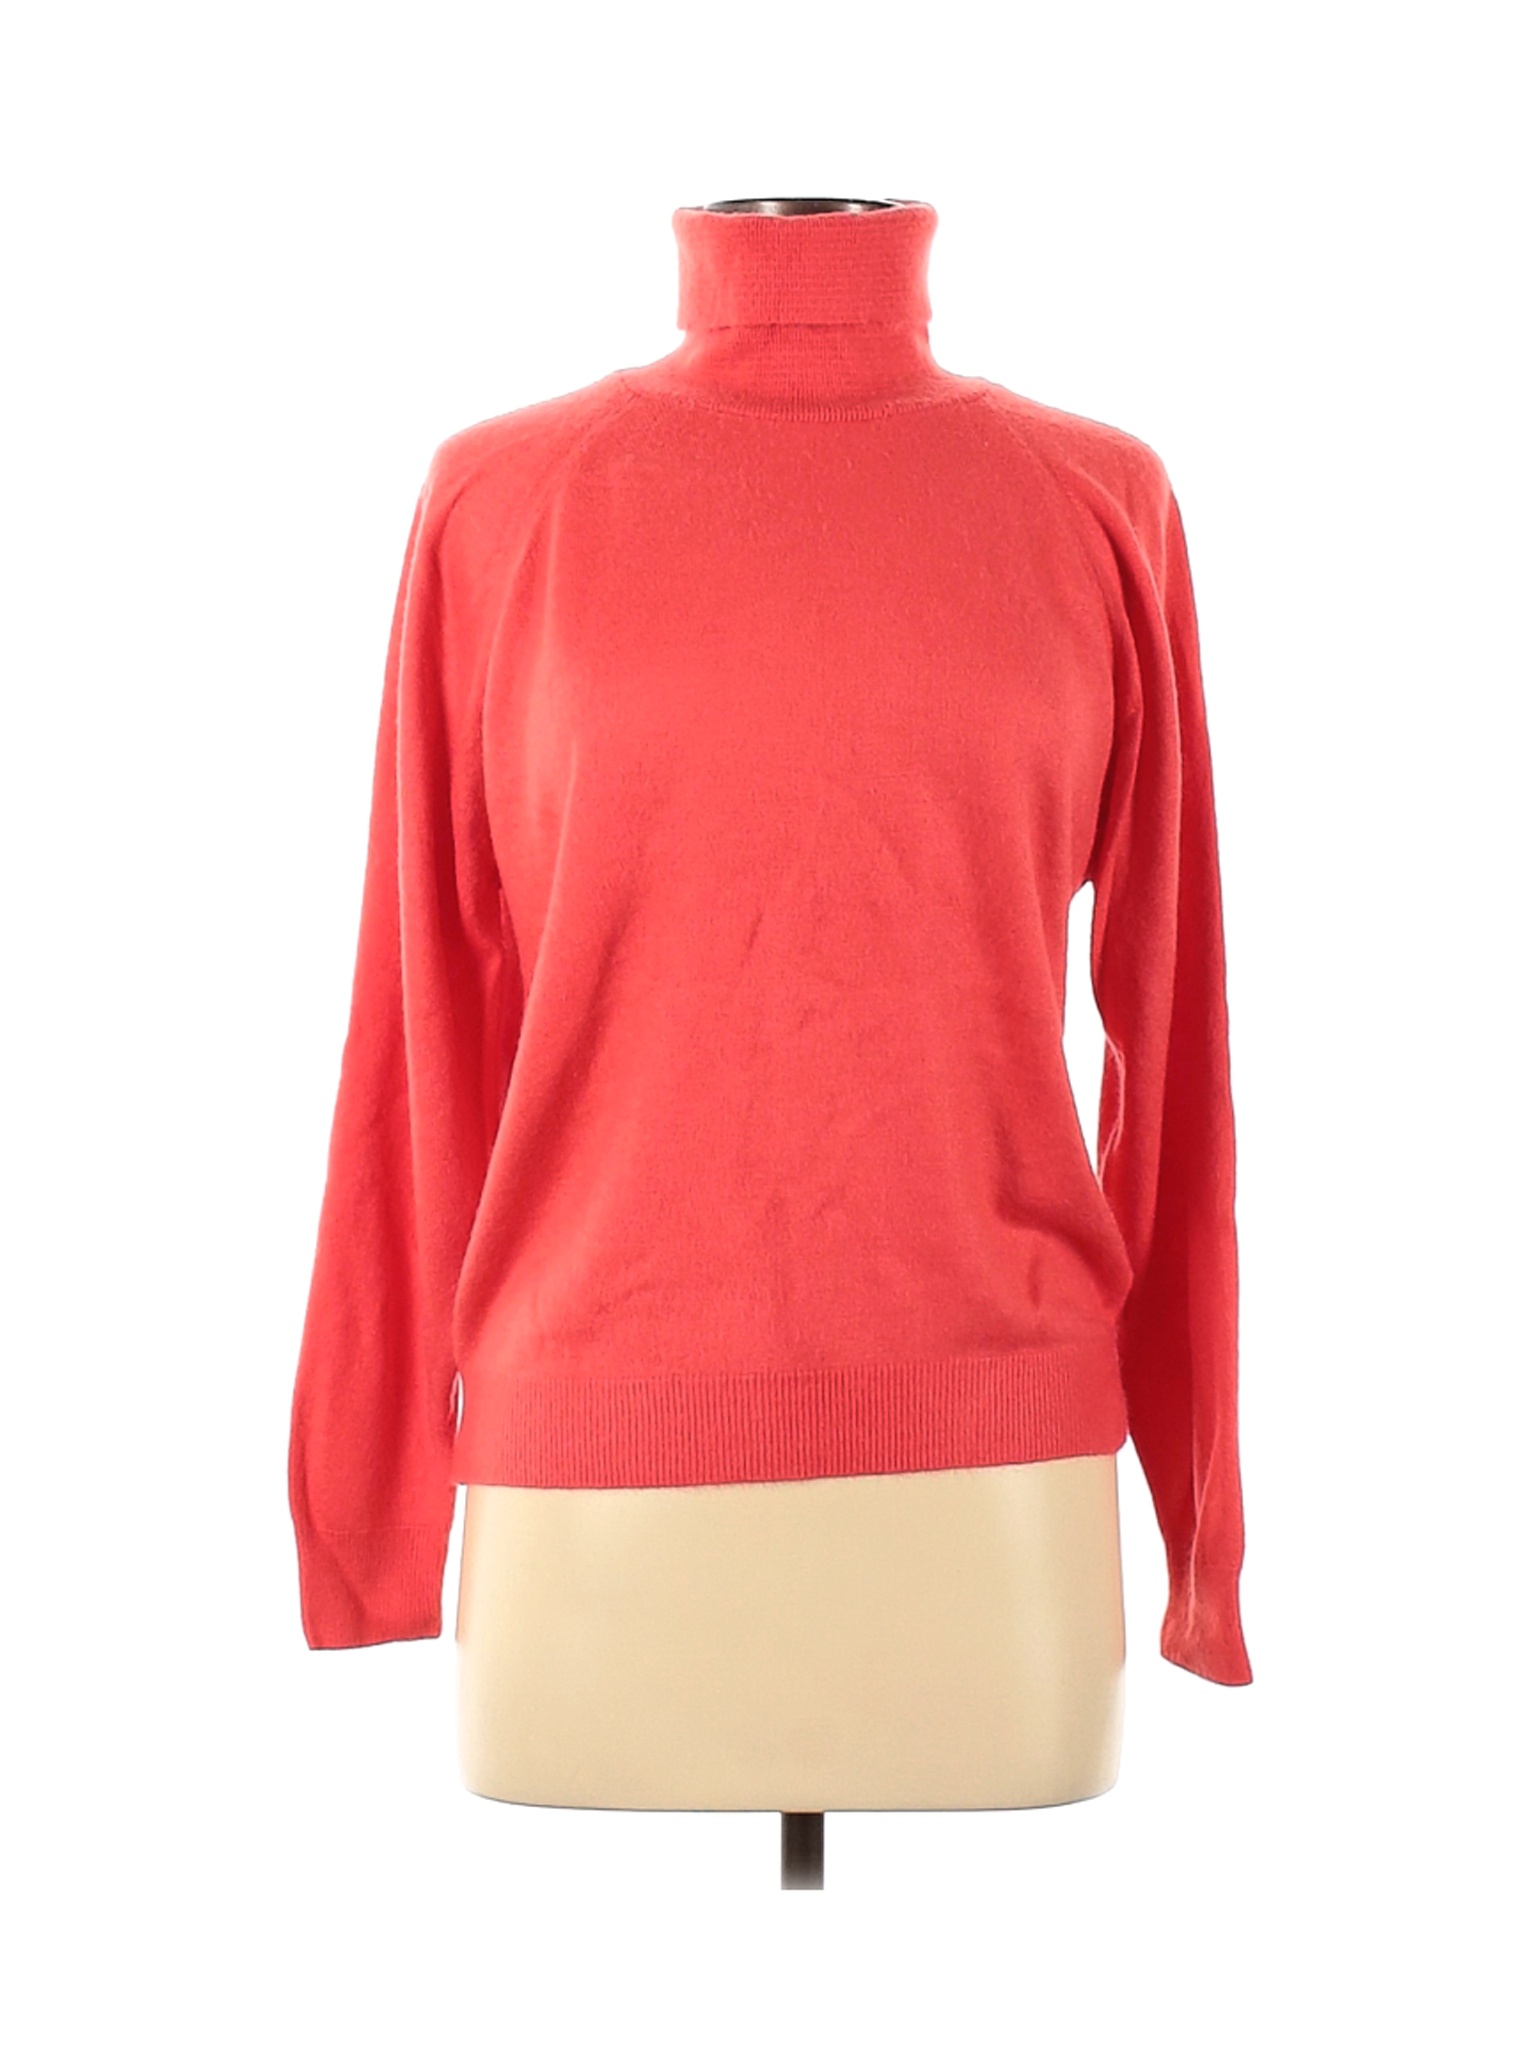 Designers Originals Women Pink Turtleneck Sweater M | eBay